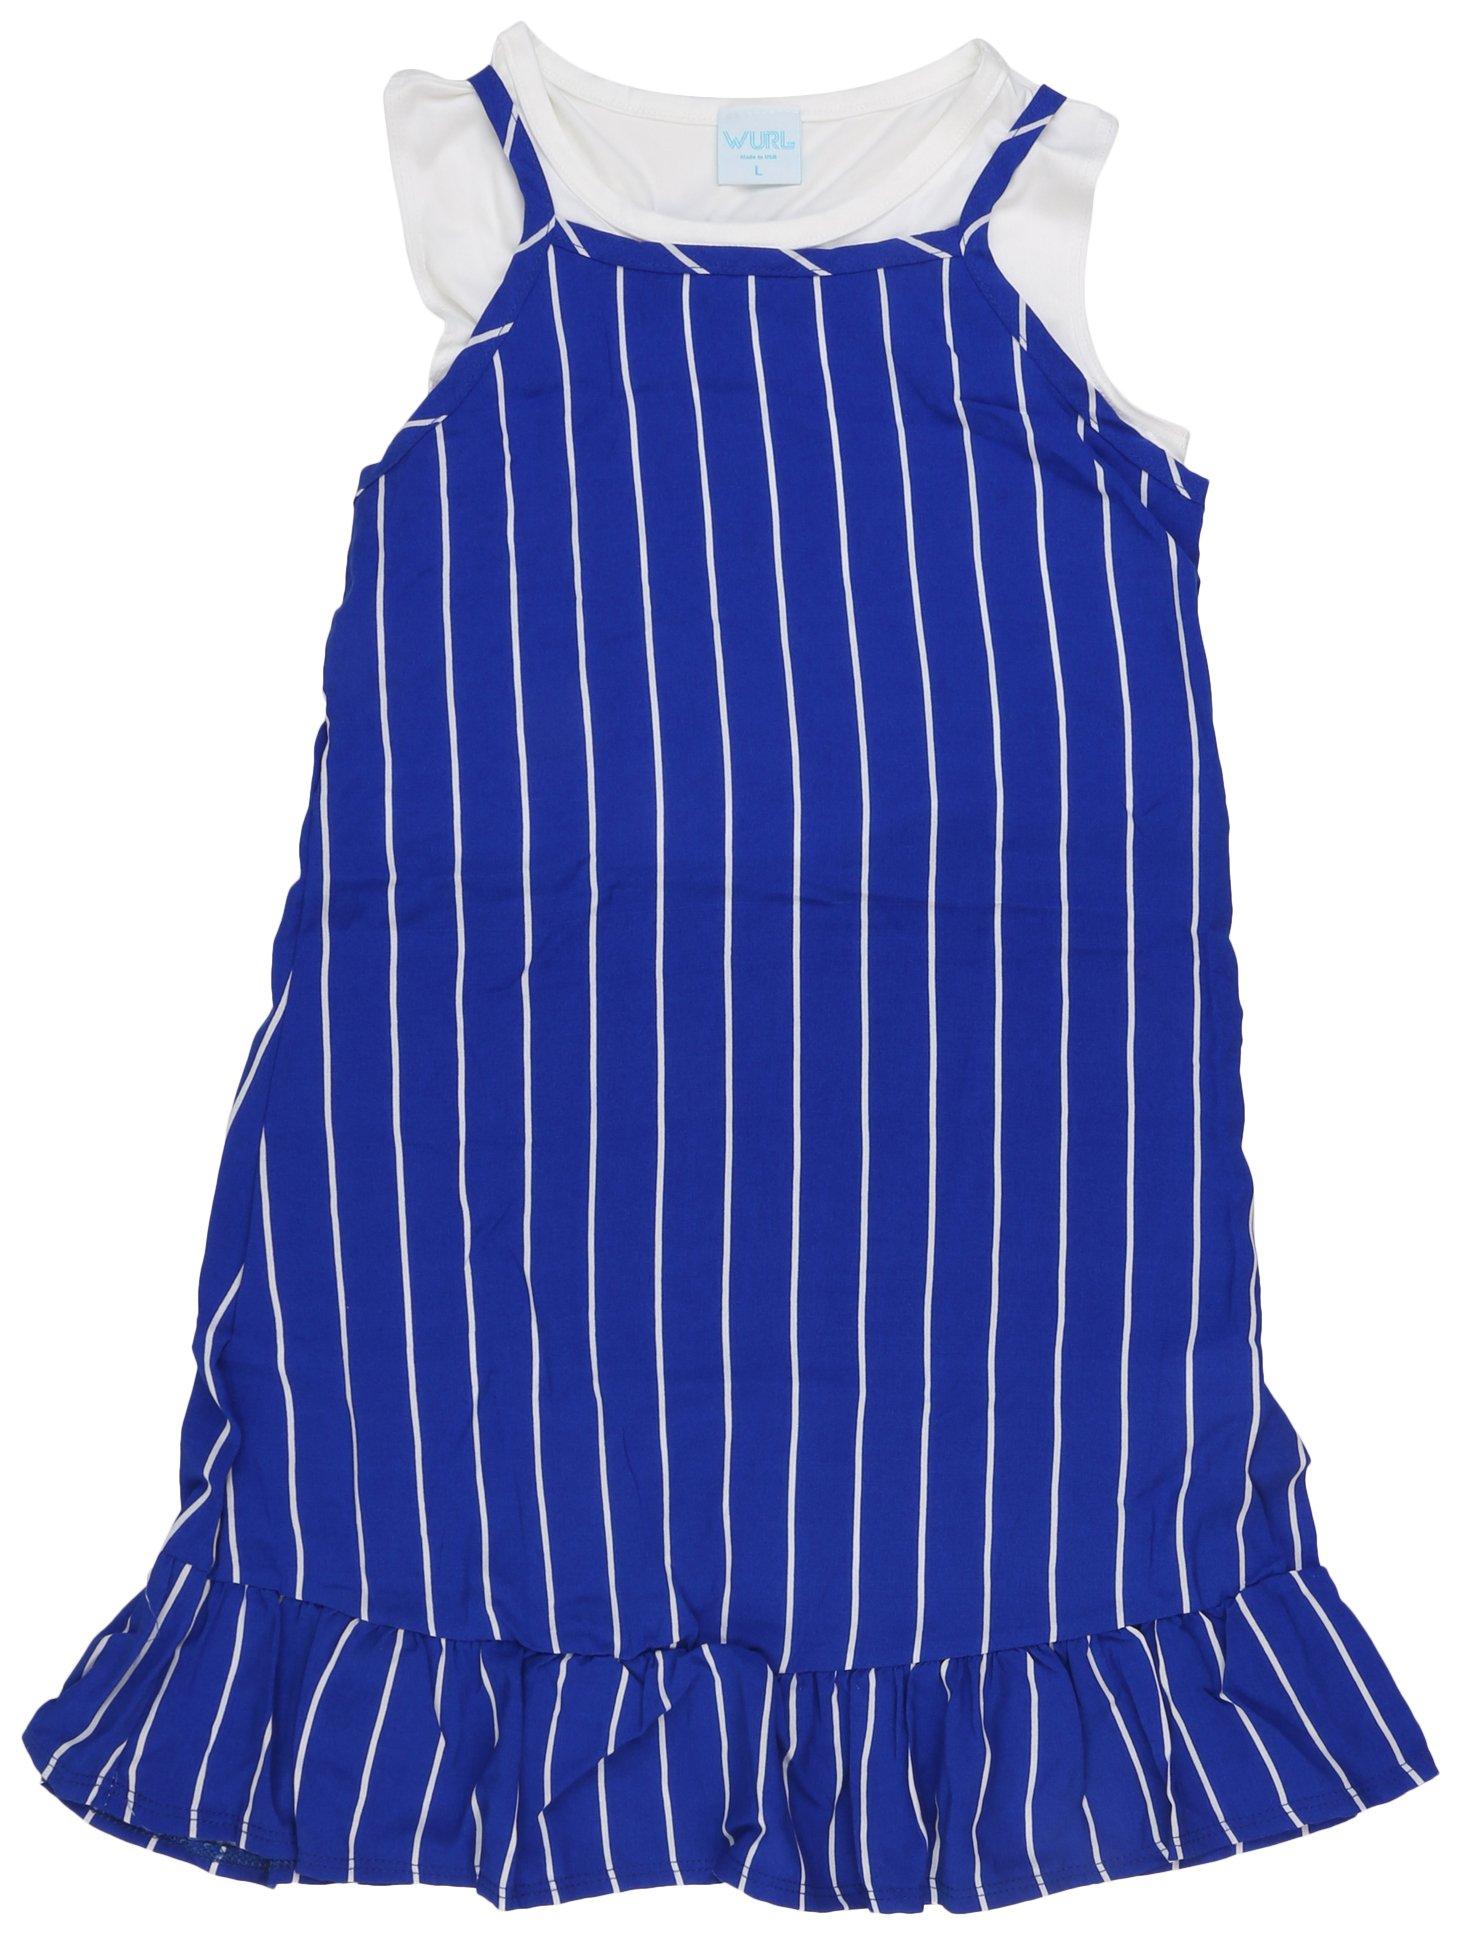 Big Girls 2-pc. Blue Stripe Dress Tank Top